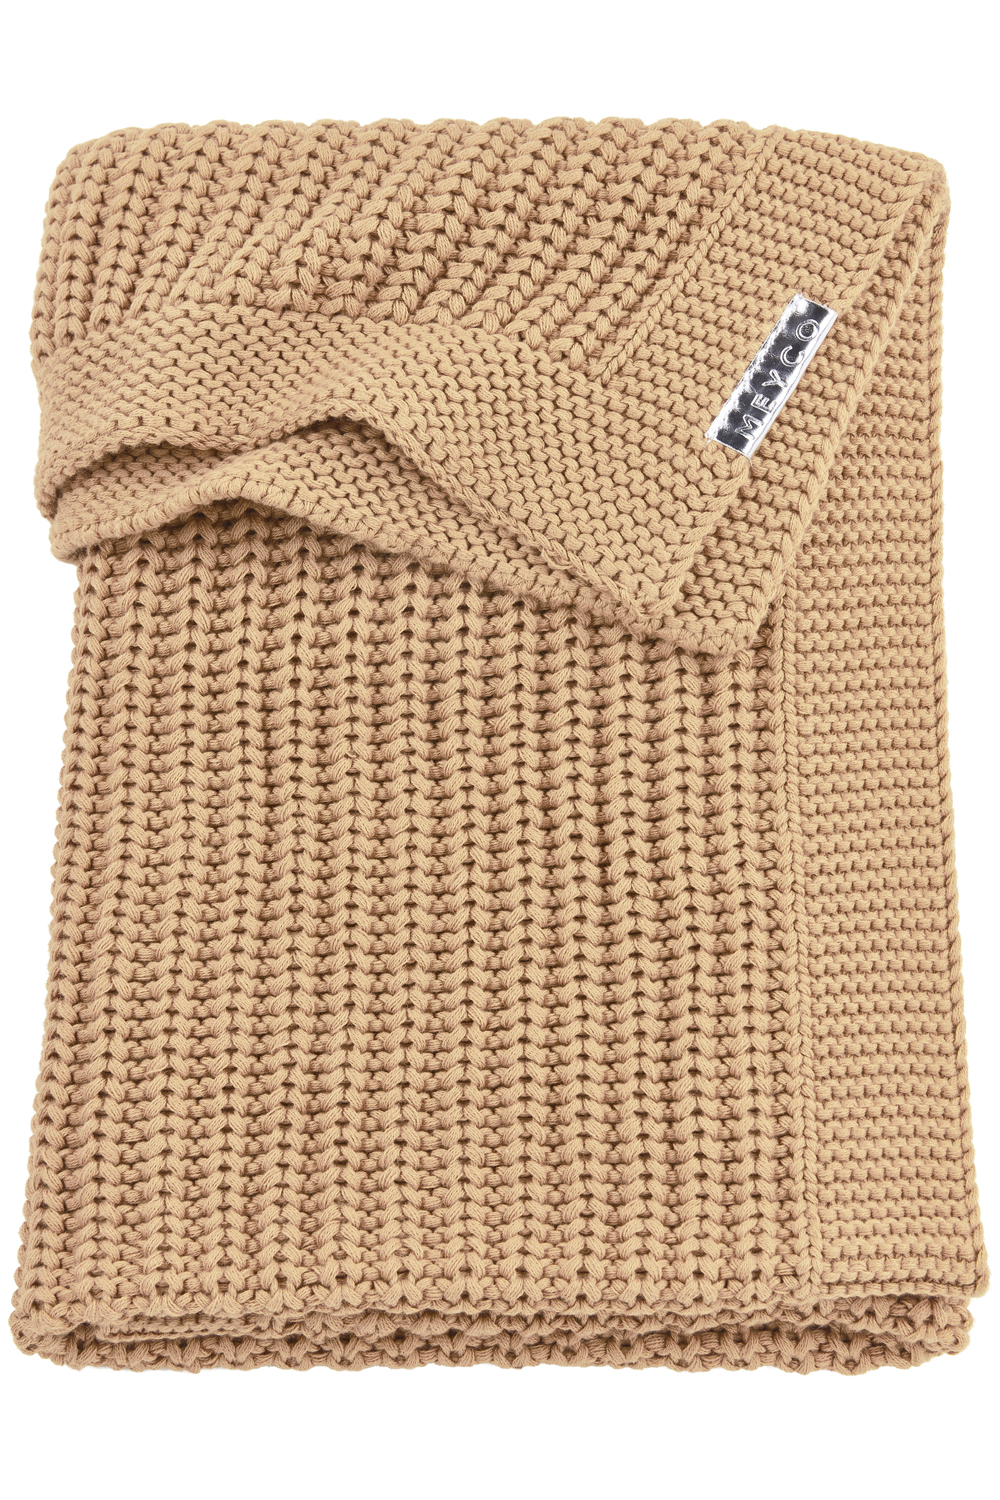 Ledikant deken Herringbone - warm sand - 100x150cm